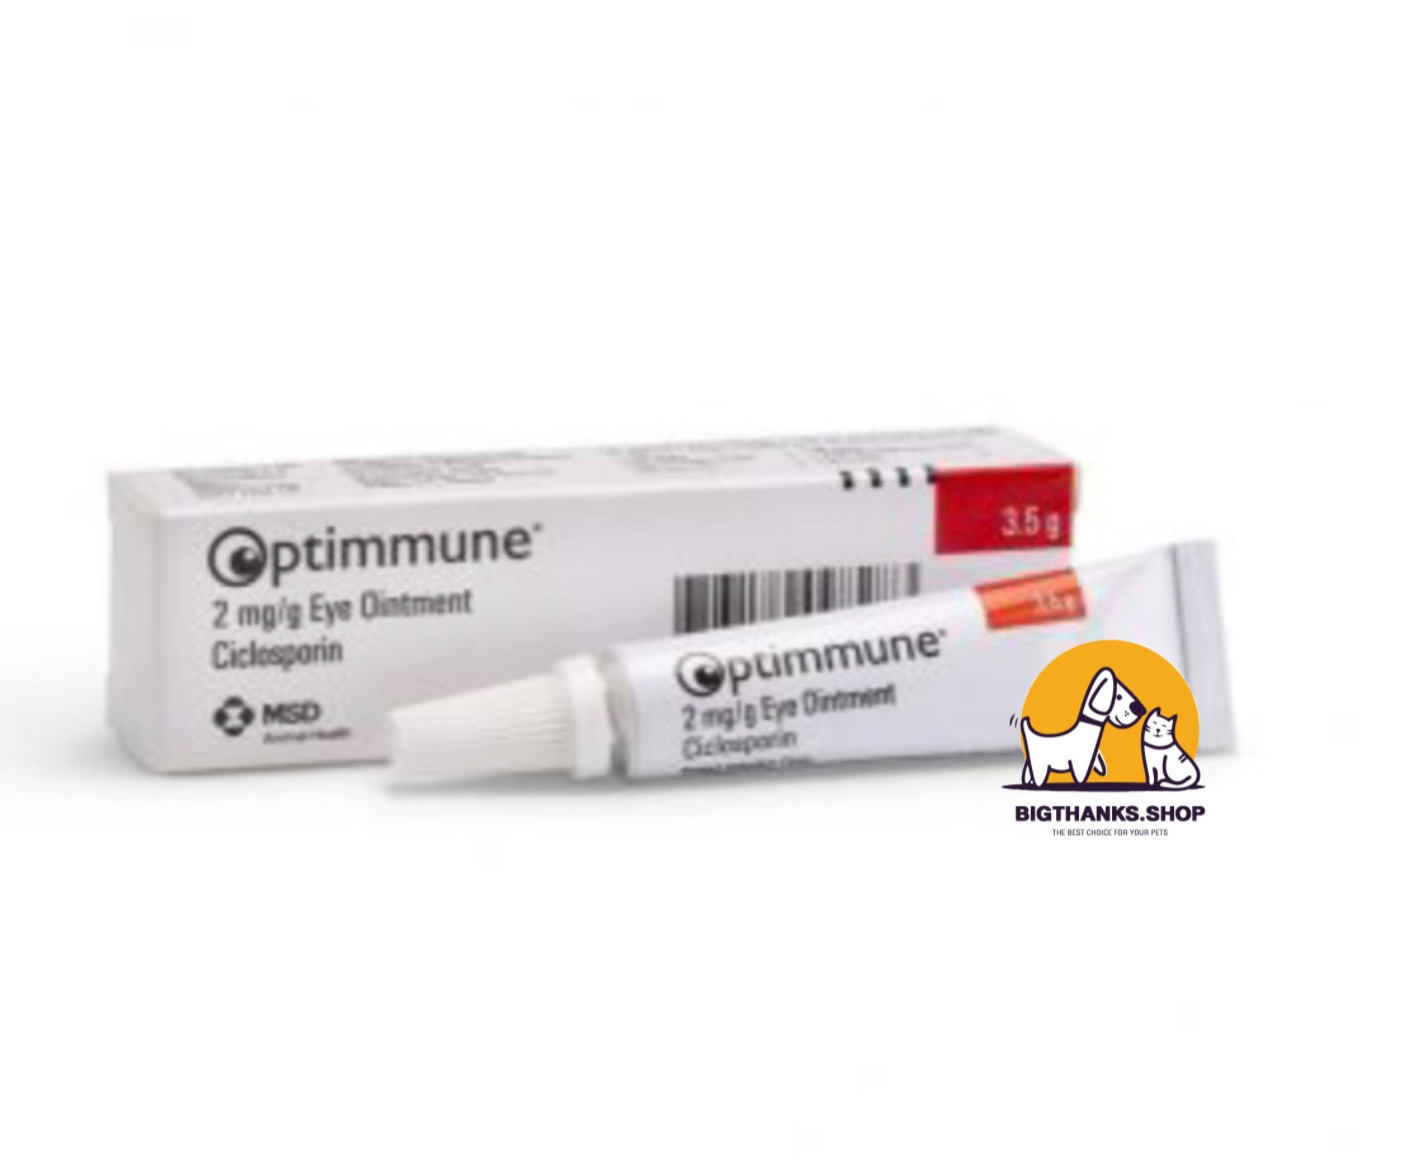 Optimmune ophthalmic ointment MSD 3.5 g. Exp.03/22 (1 หลอด/tube)